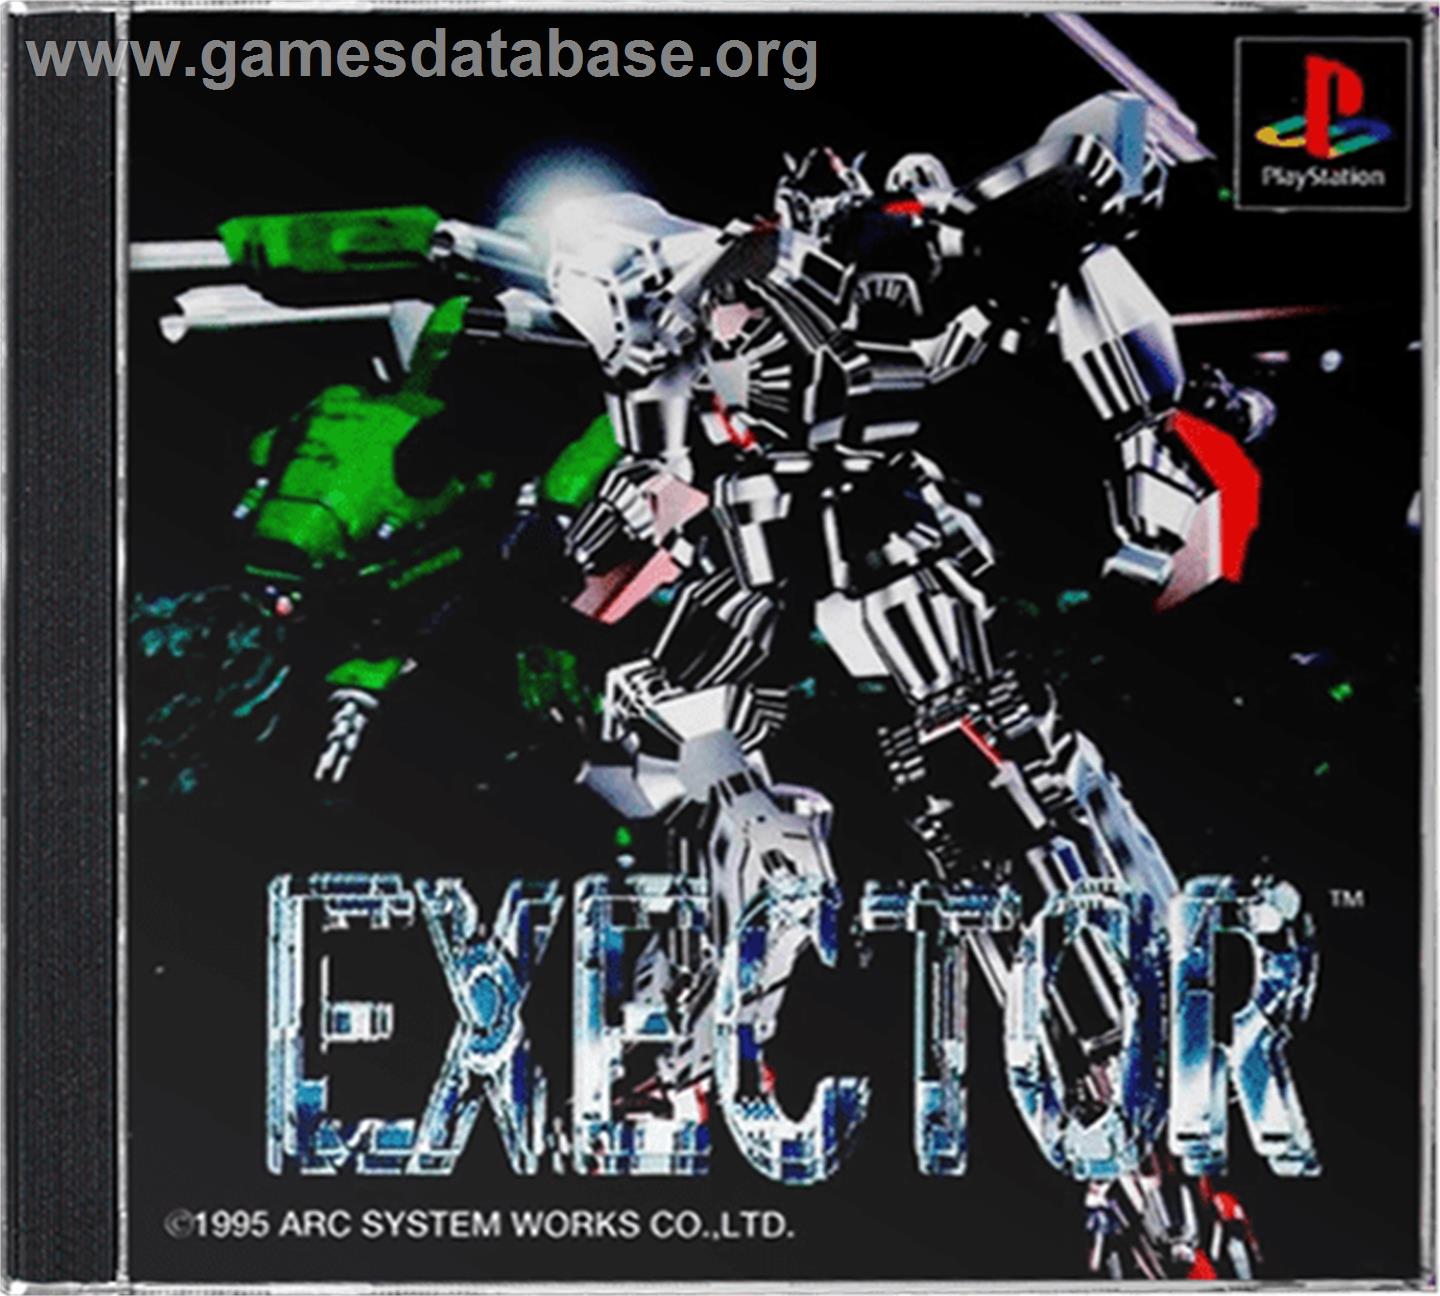 Exector - Sony Playstation - Artwork - Box